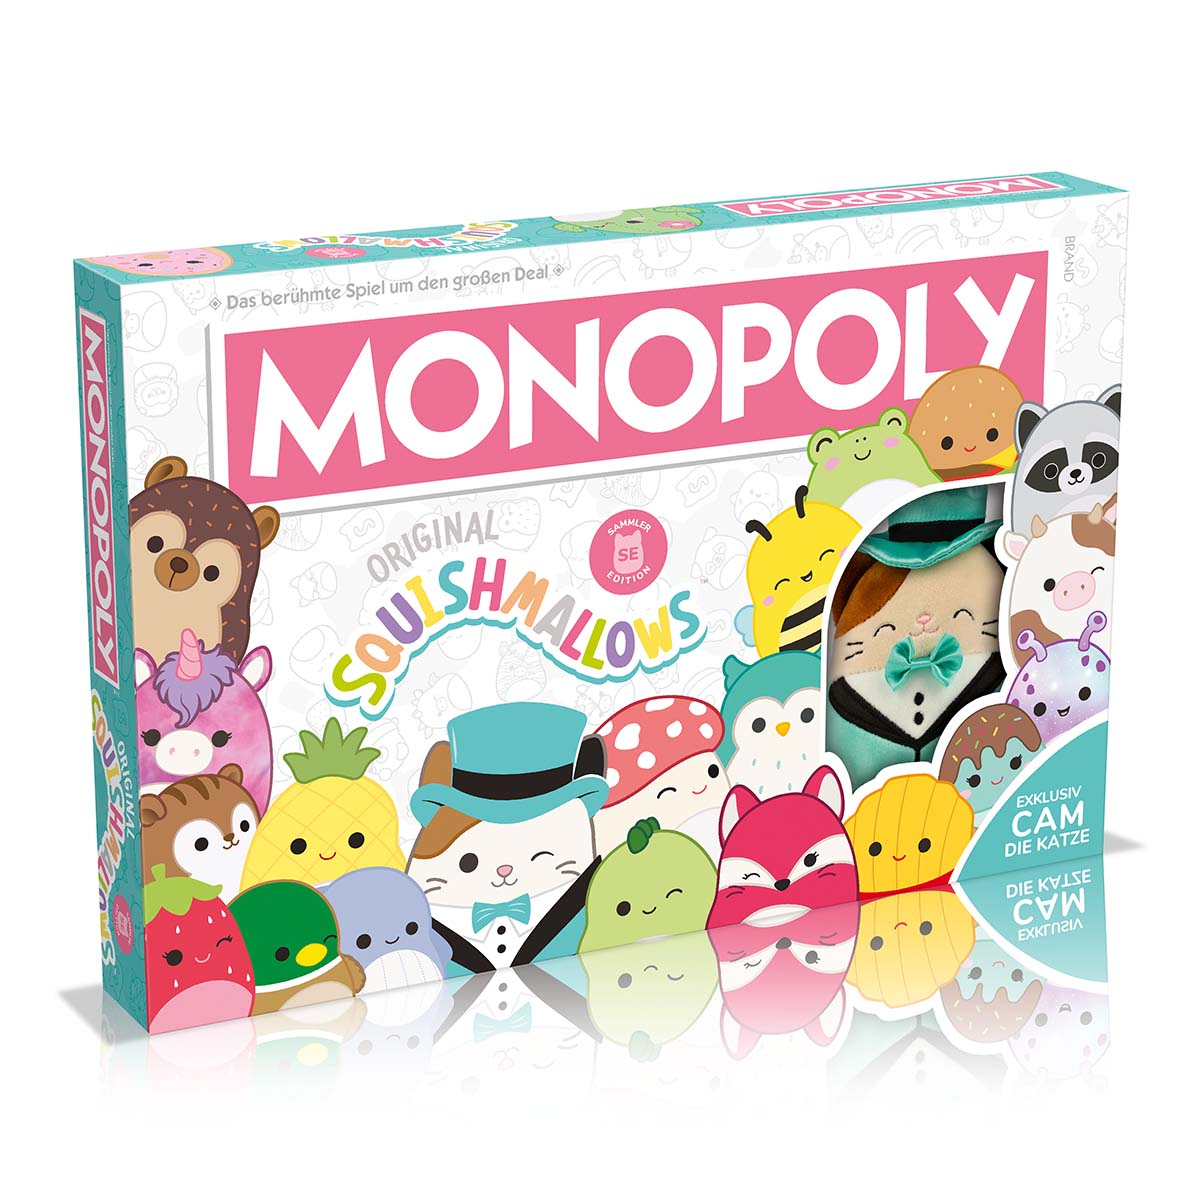 Monopoly - Squishmallows